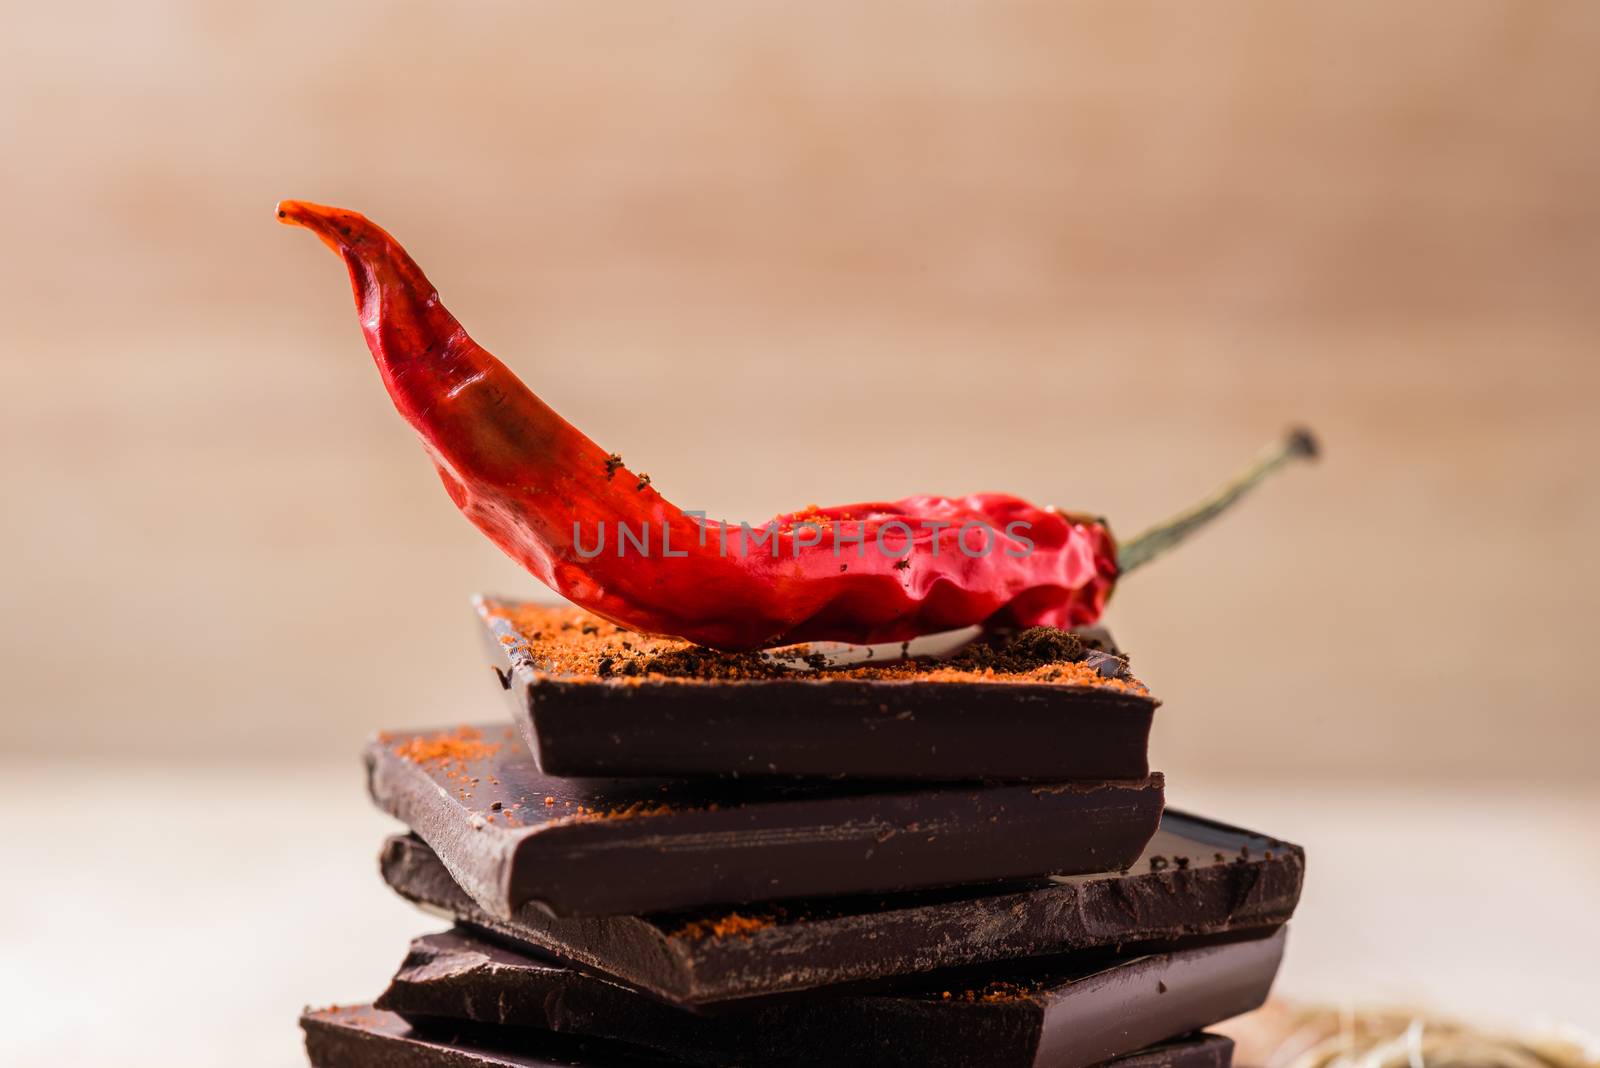 Dry Chili pepper on chocolate bars by Seva_blsv